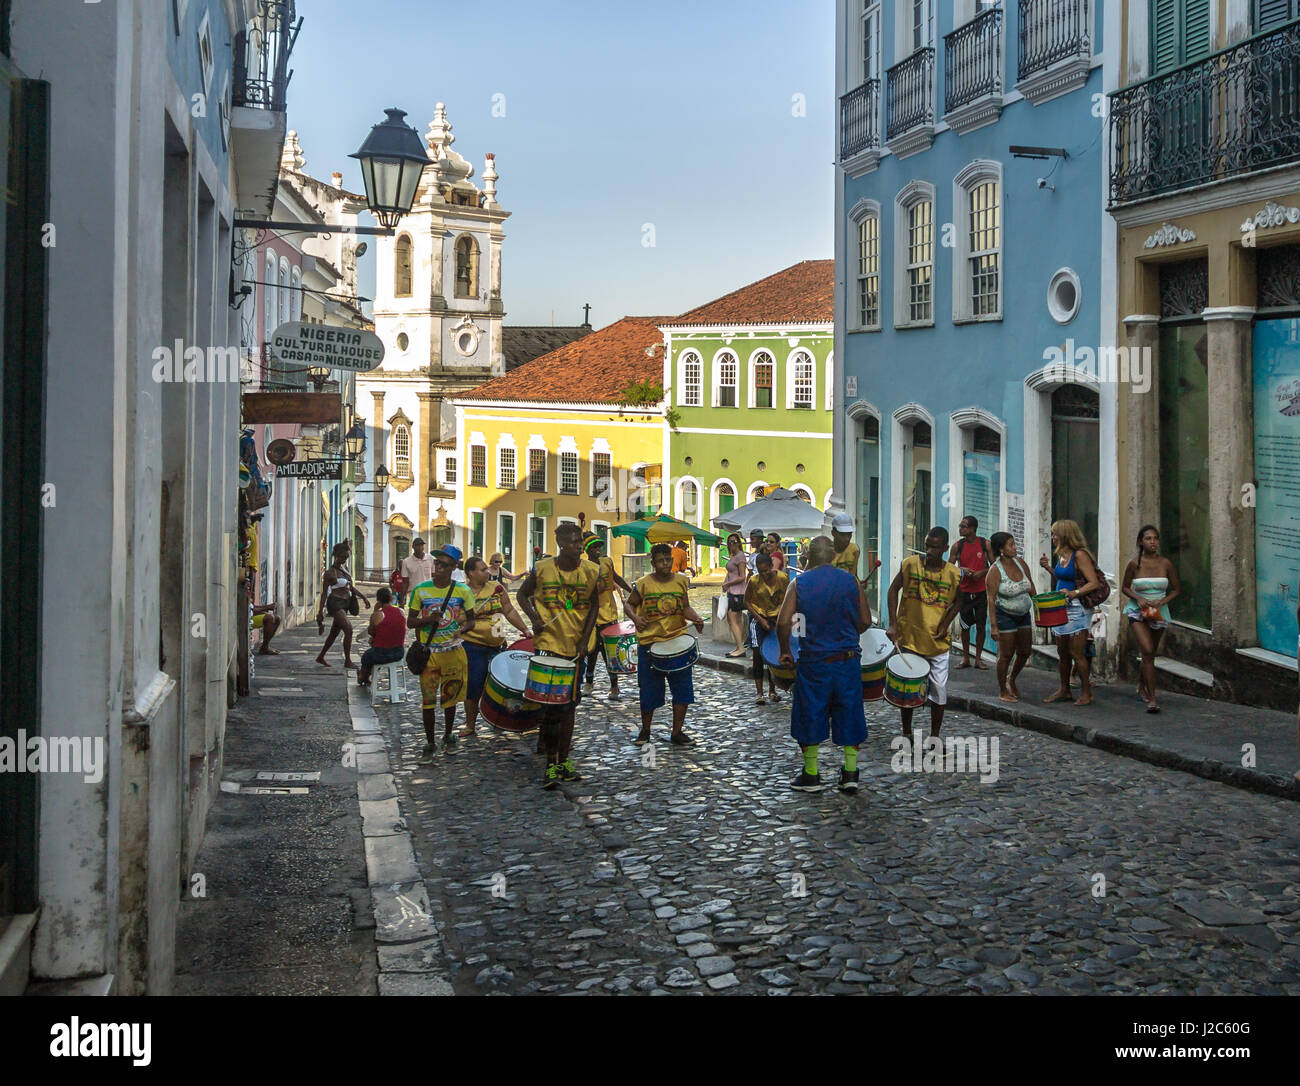 Brasilianische Trommelgruppe auf den Straßen von Pelourinho - Salvador, Bahia, Brasilien Stockfoto